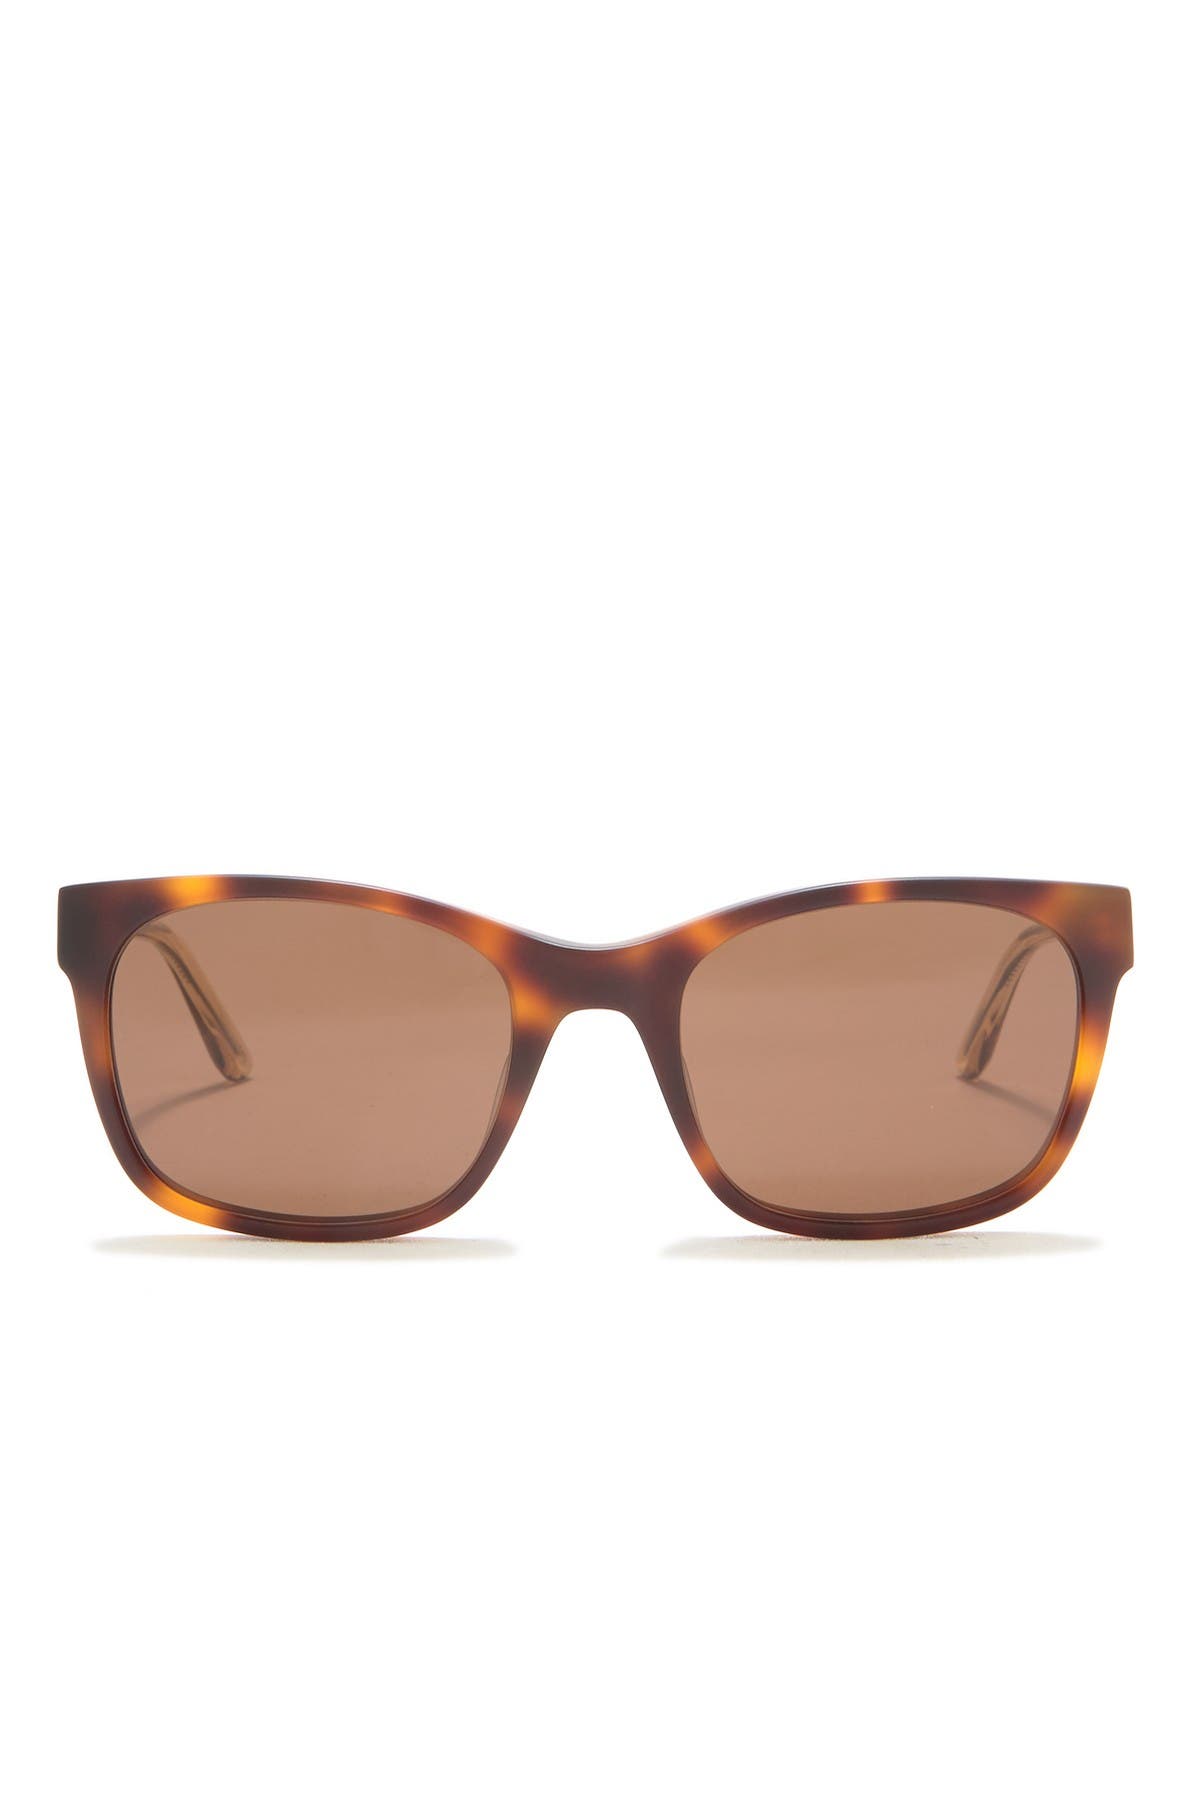 Bottega Veneta | 51mm Rounded Square Core Sunglasses | Nordstrom Rack